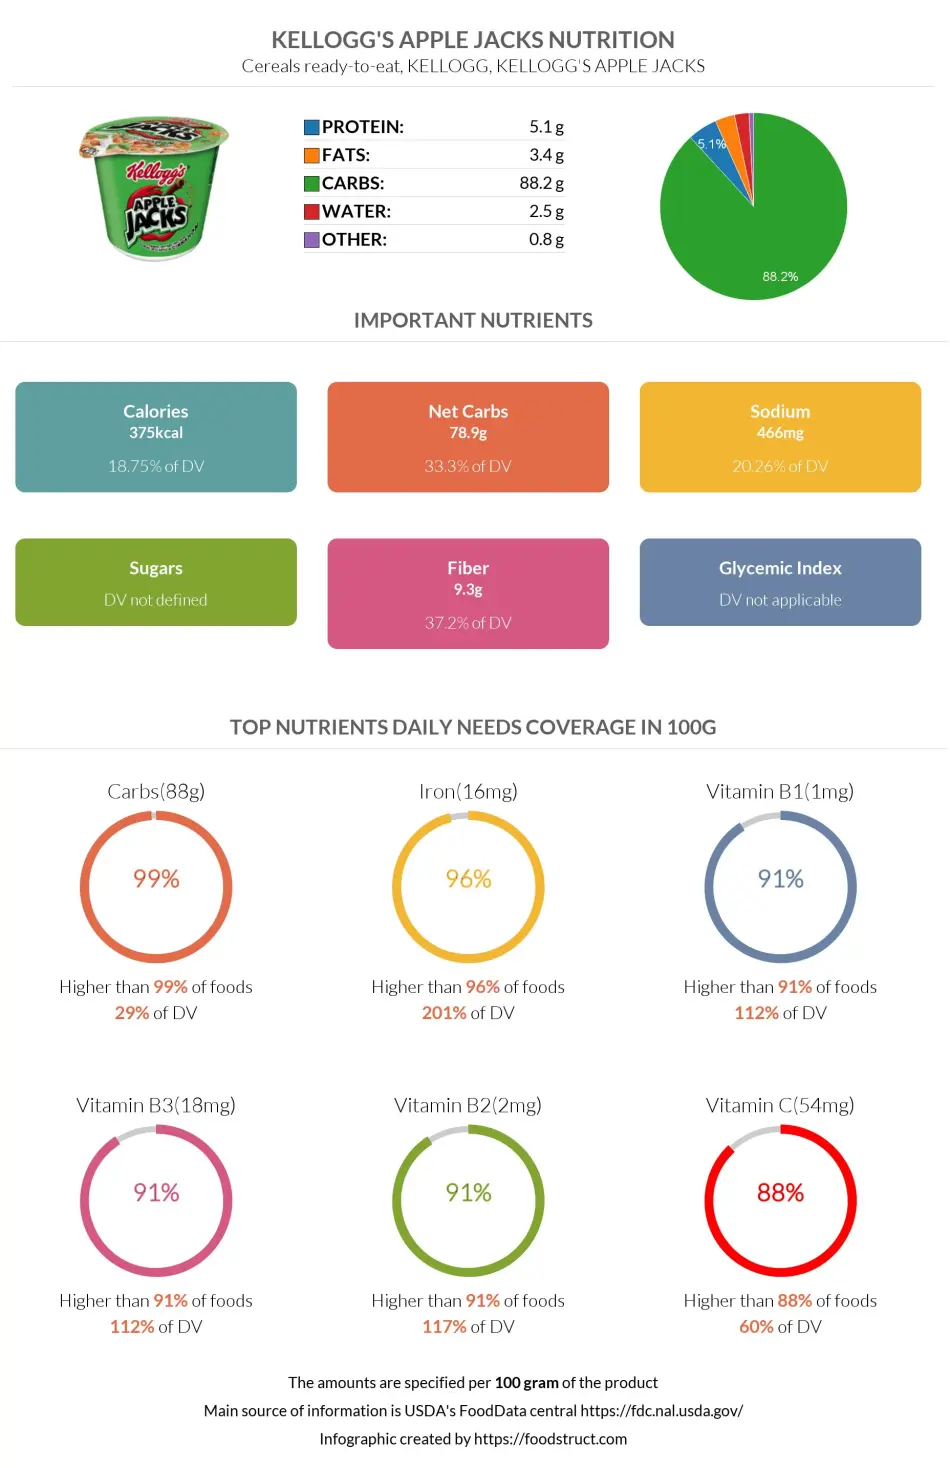 Kellogg's Apple Jacks nutrition infographic